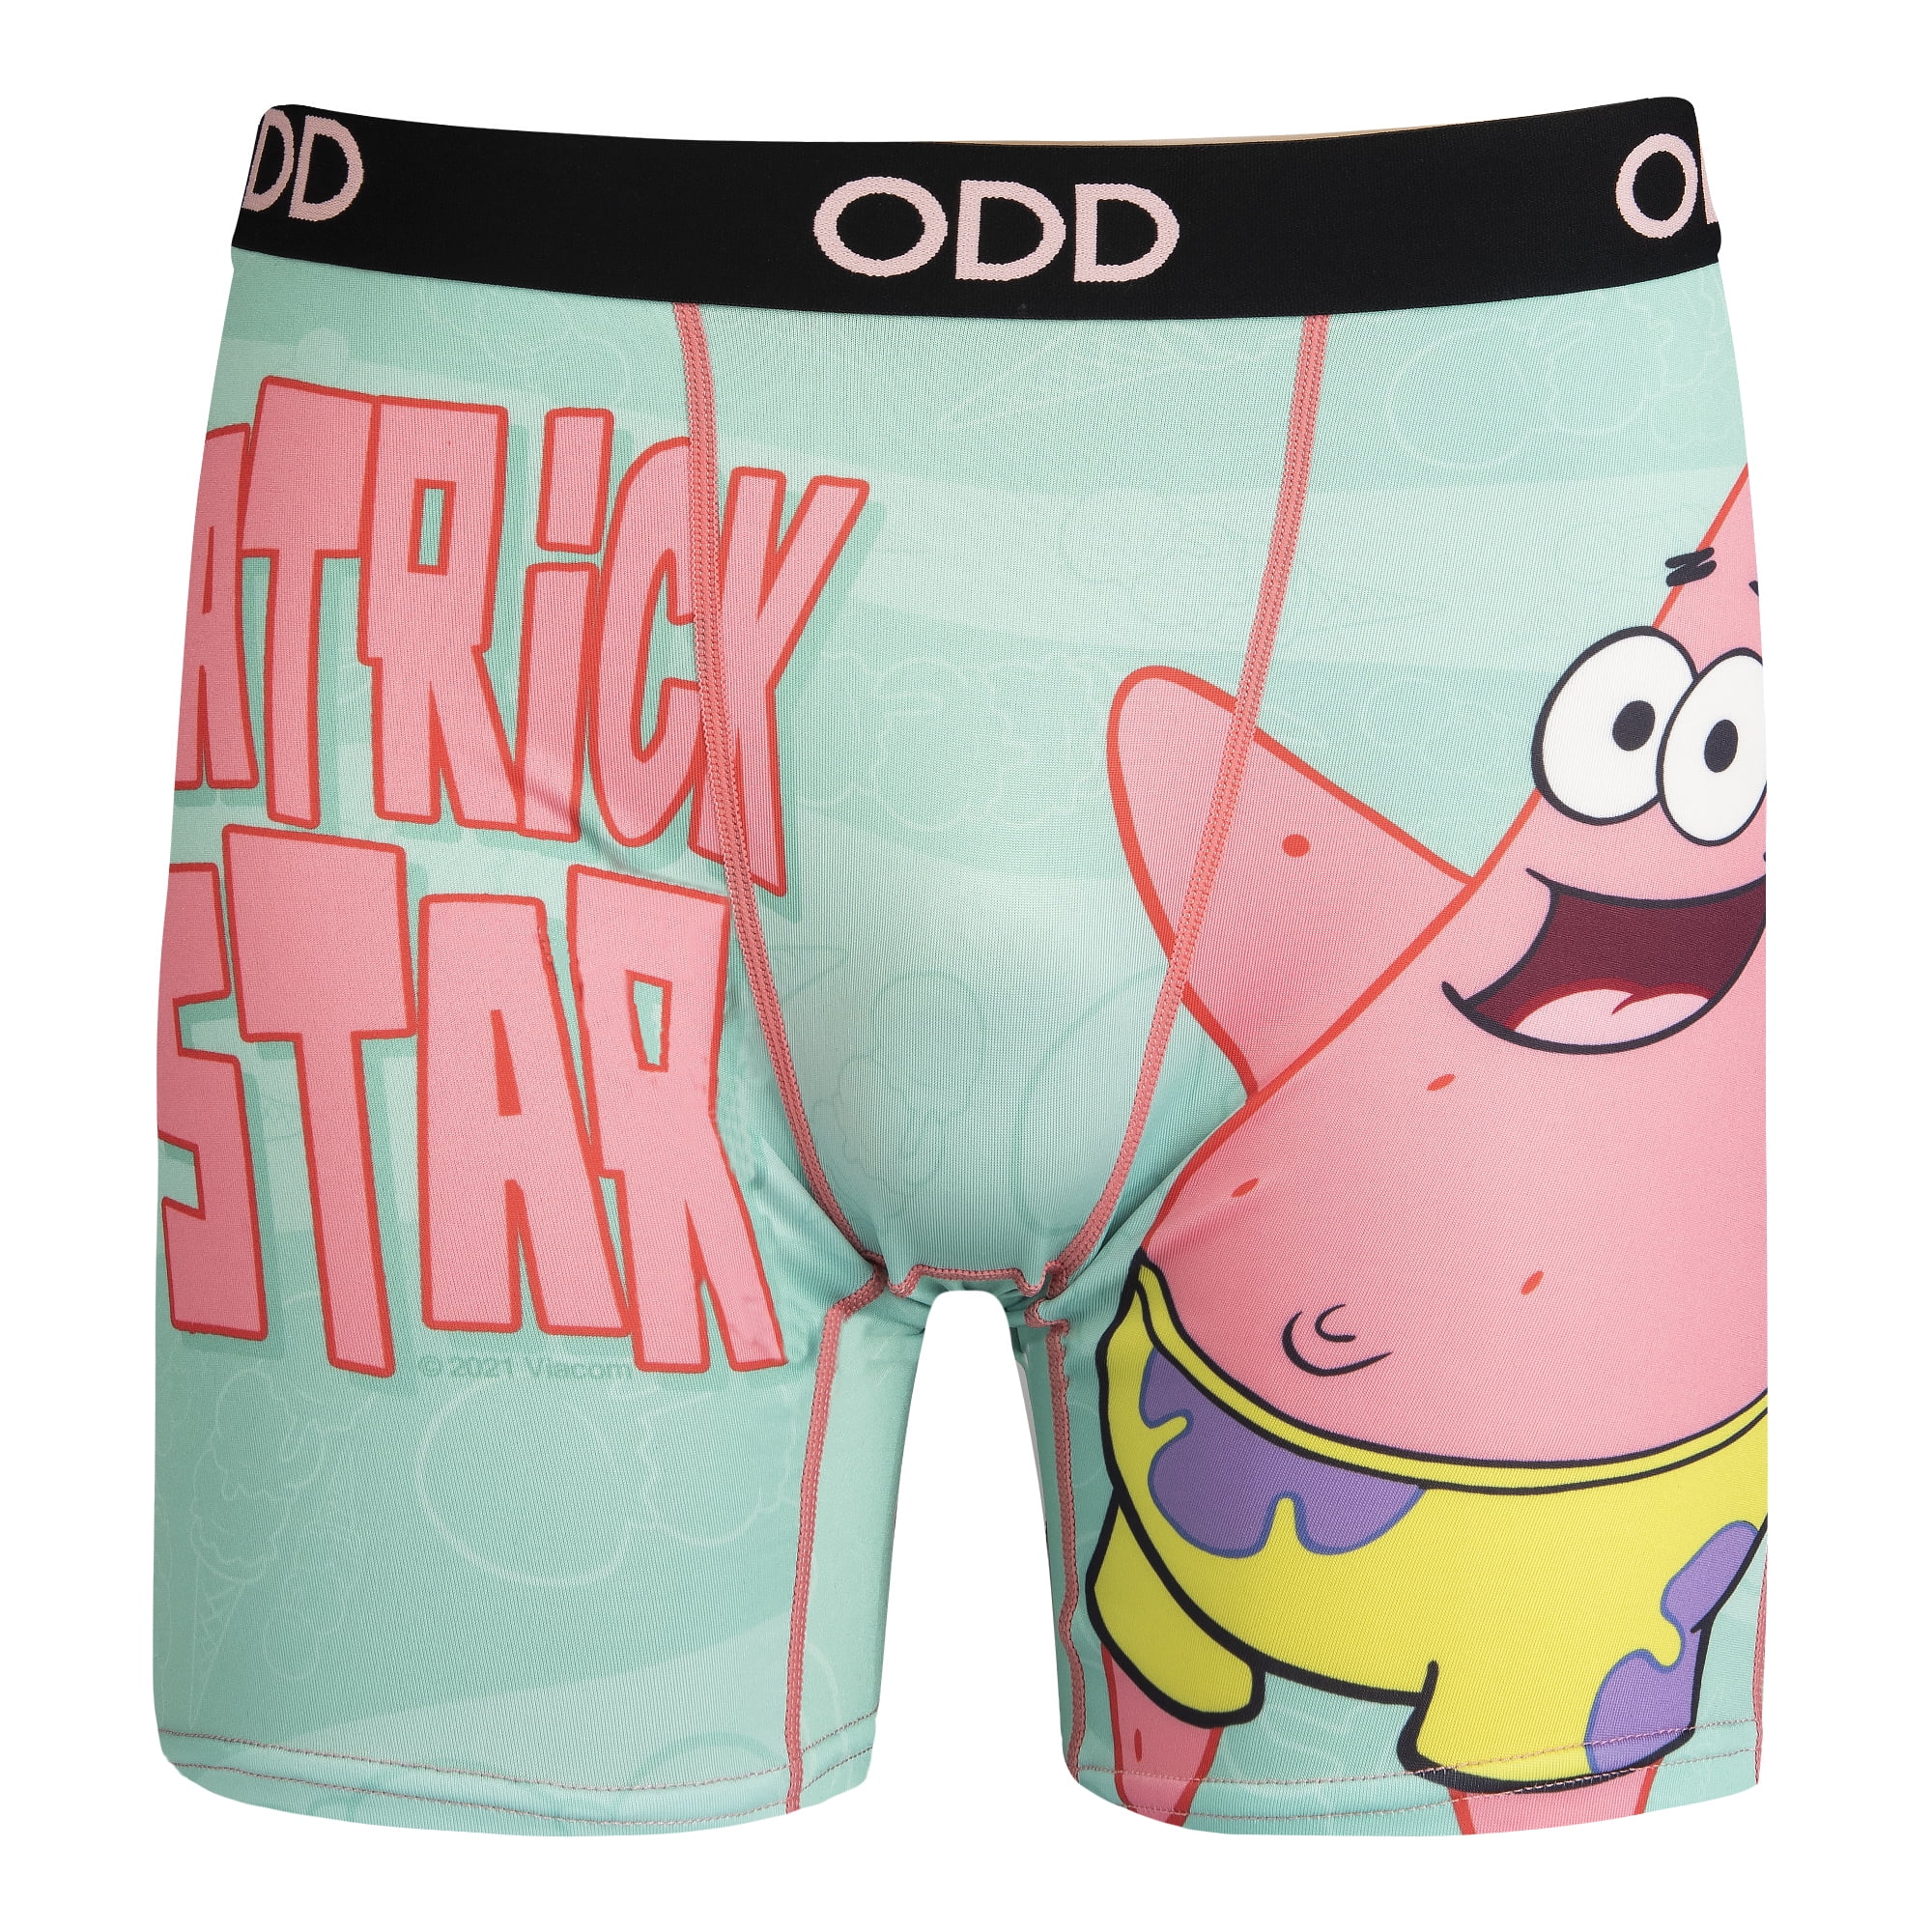 Odd Sox, Funny Men's Boxer Briefs Underwear, Nickelodeon SpongeBob, Patrick